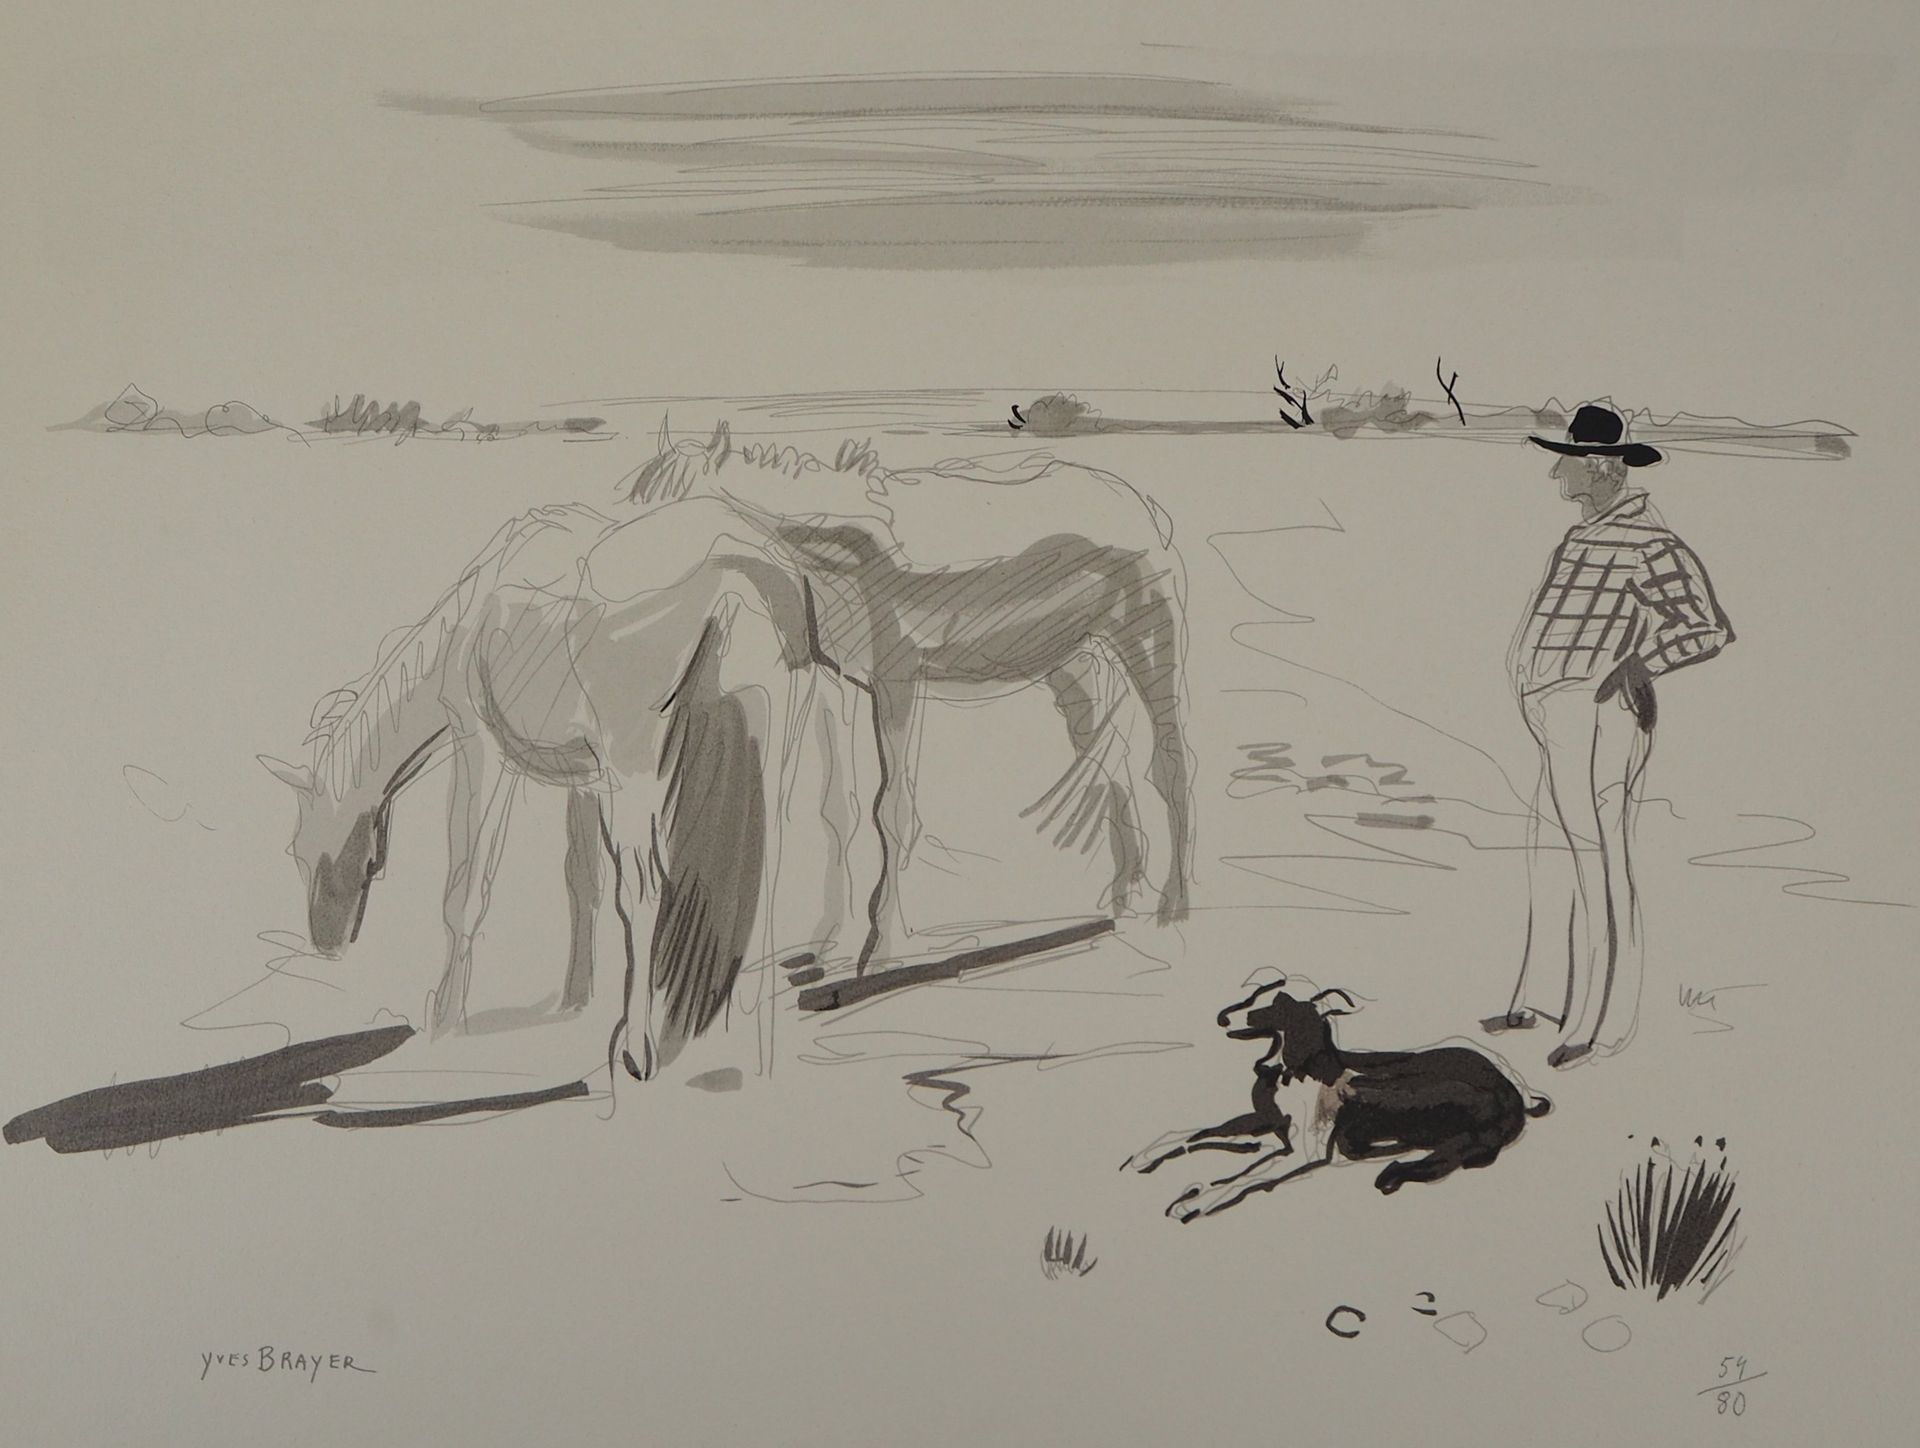 Yves BRAYER Yves BRAYER

马匹和一个饲养员

石版画

板块中的签名

 牛皮纸上，50,5 x 65厘米

 编号为80份

 

 &hellip;